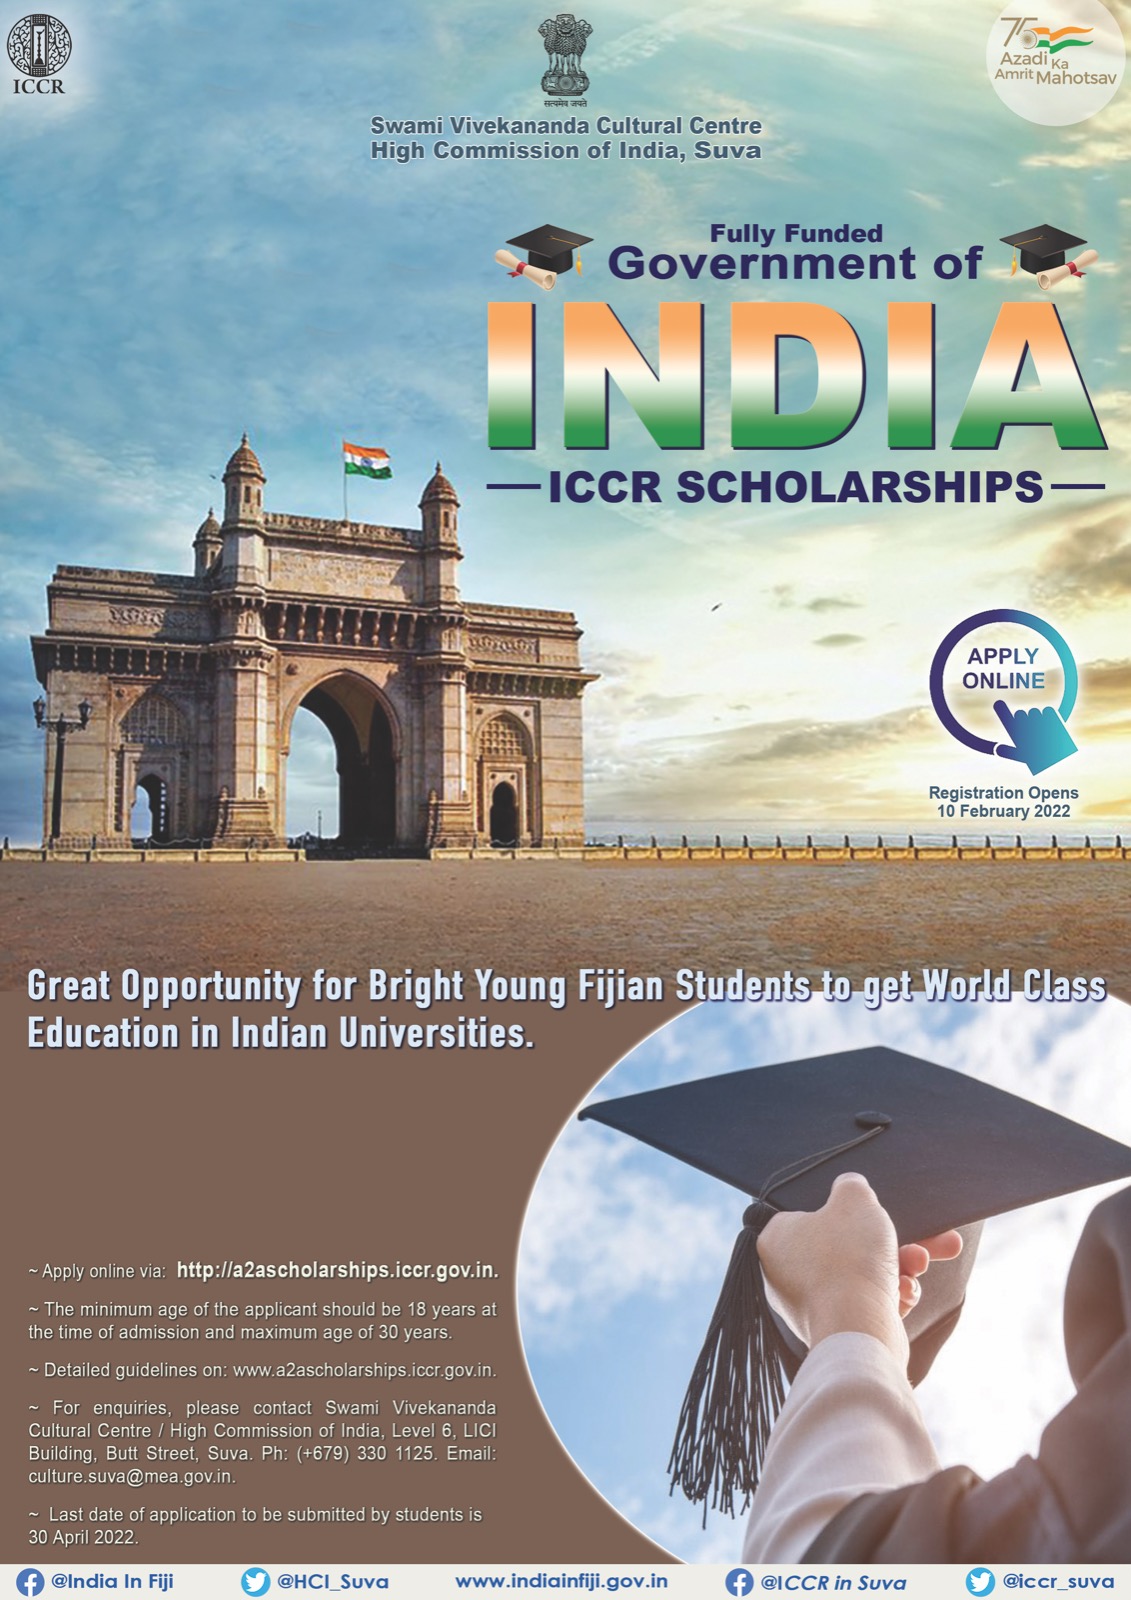  ICCR Scholarship Application Open till 30 April, 2022.